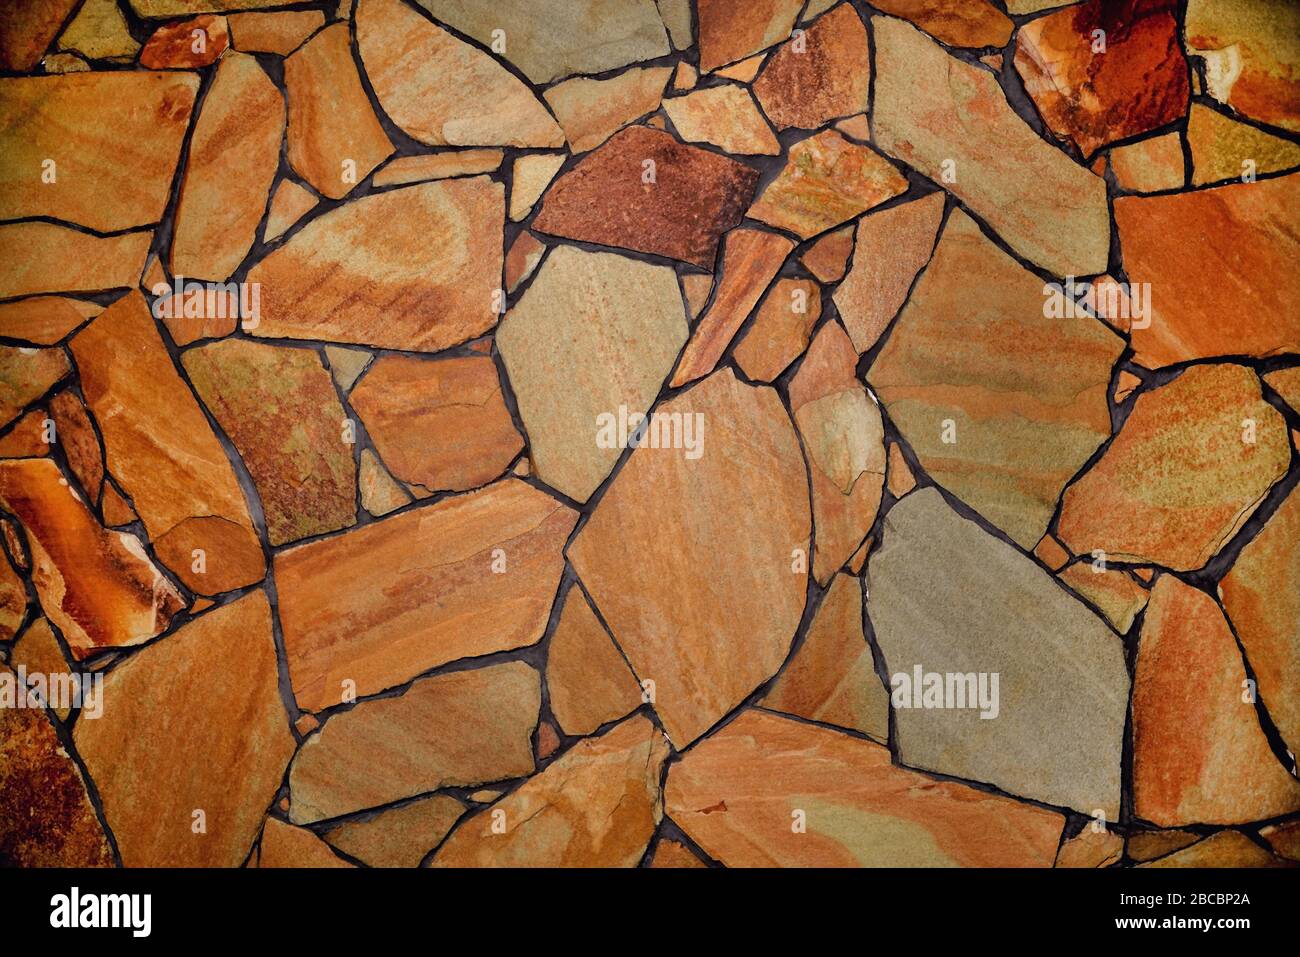 Stone-lined heterogeneous background, textured surface Stock Photo